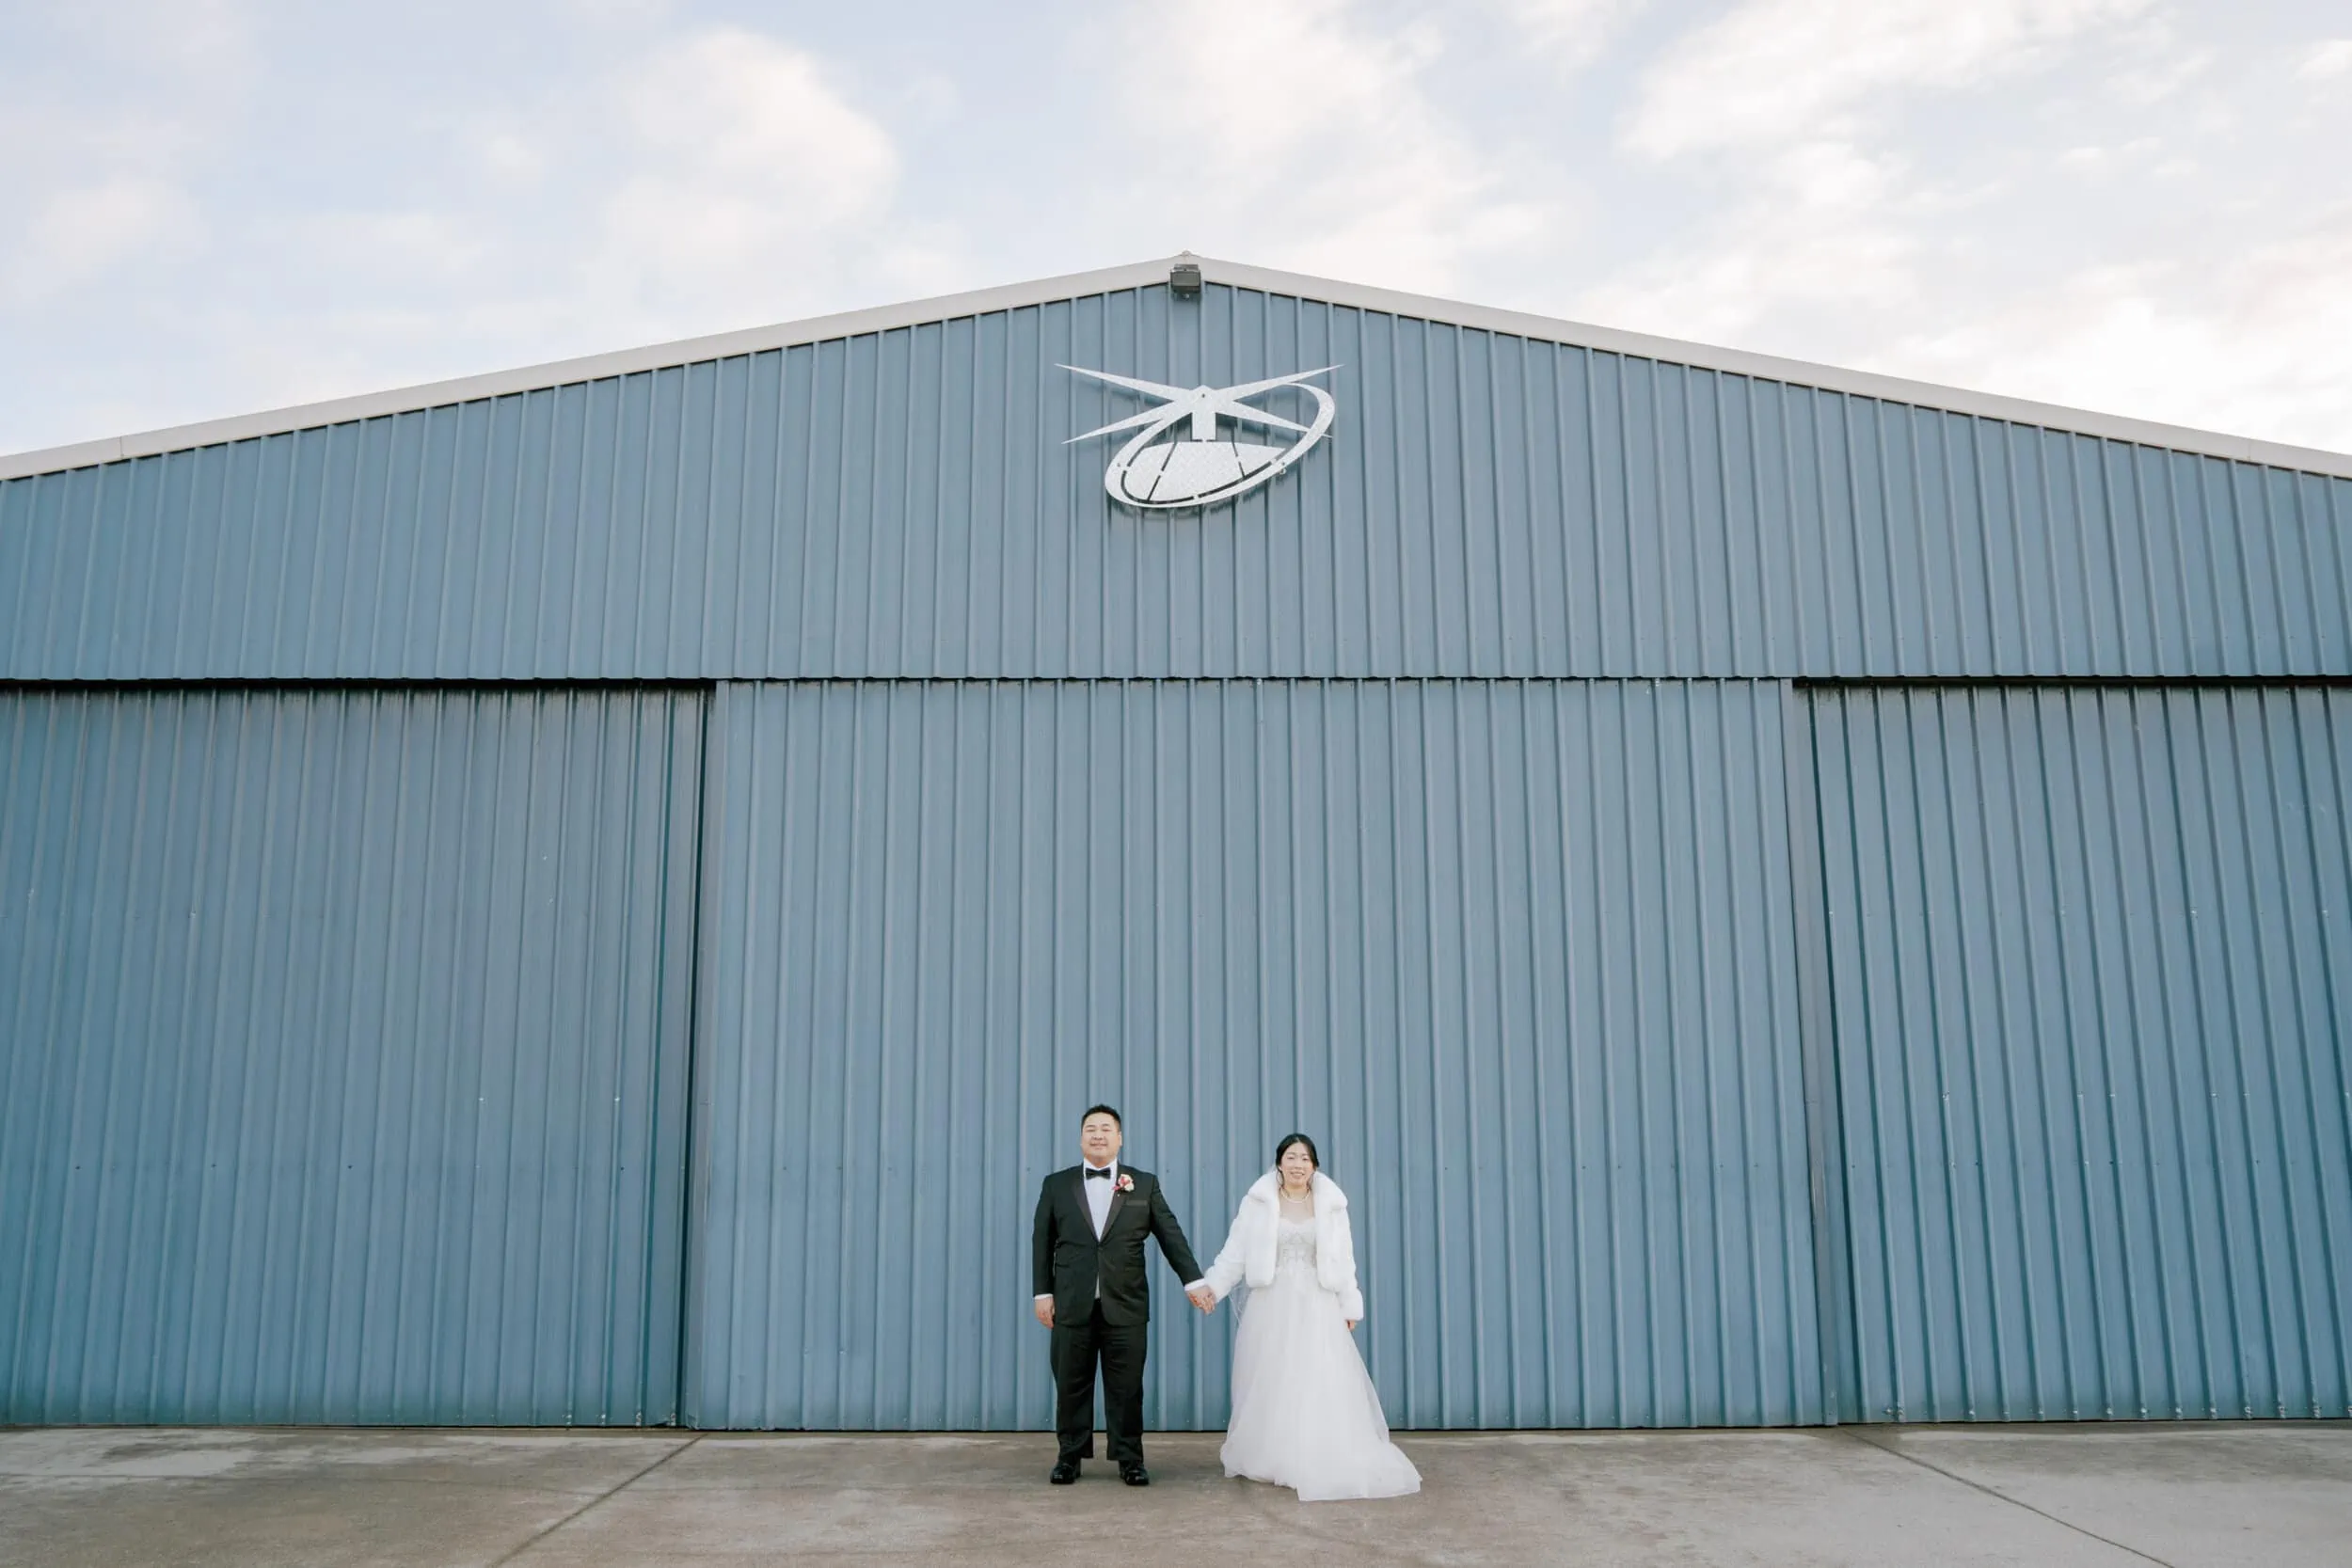 Queenstown New Zealand Elopement Wedding Photographer - Lam and Wendy's wedding shoot in front of a blue hangar.